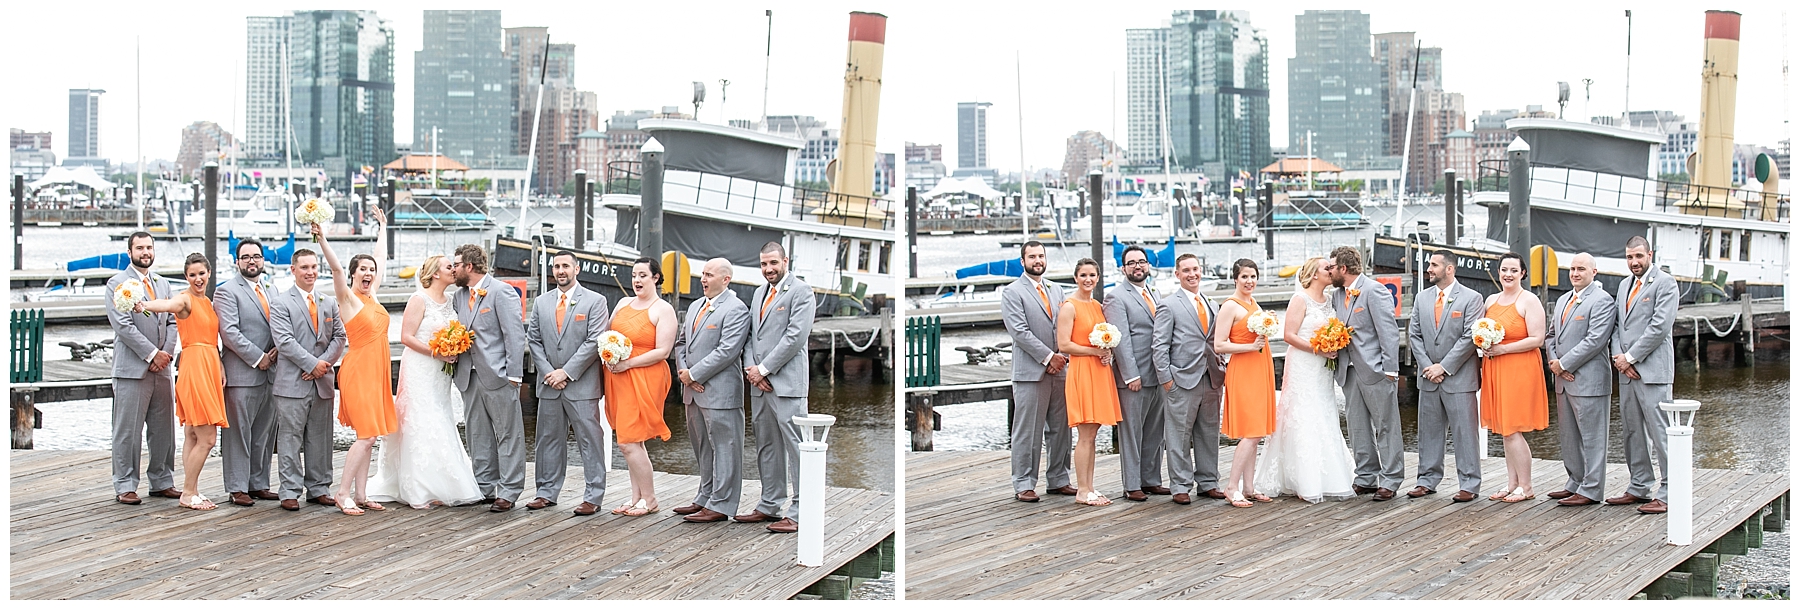 Orioles Wedding | Baltimore Best Wedding Photographers | Baltimore Museum of Industry Weddings